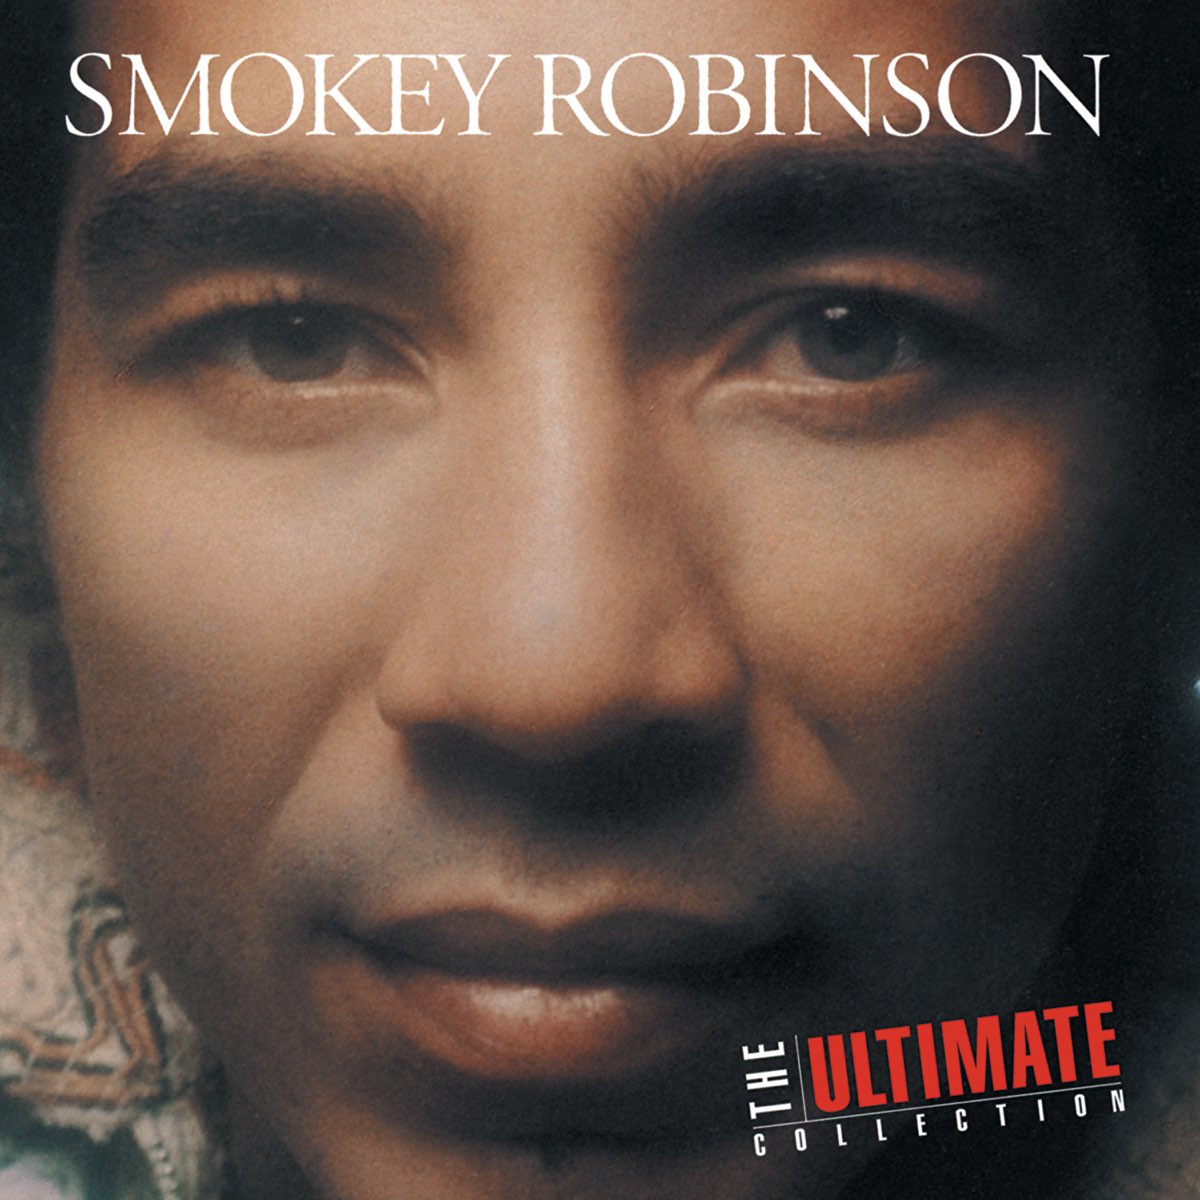 Альбом "The Ultimate Collection: Smokey Robinson" (Smokey Robinso...